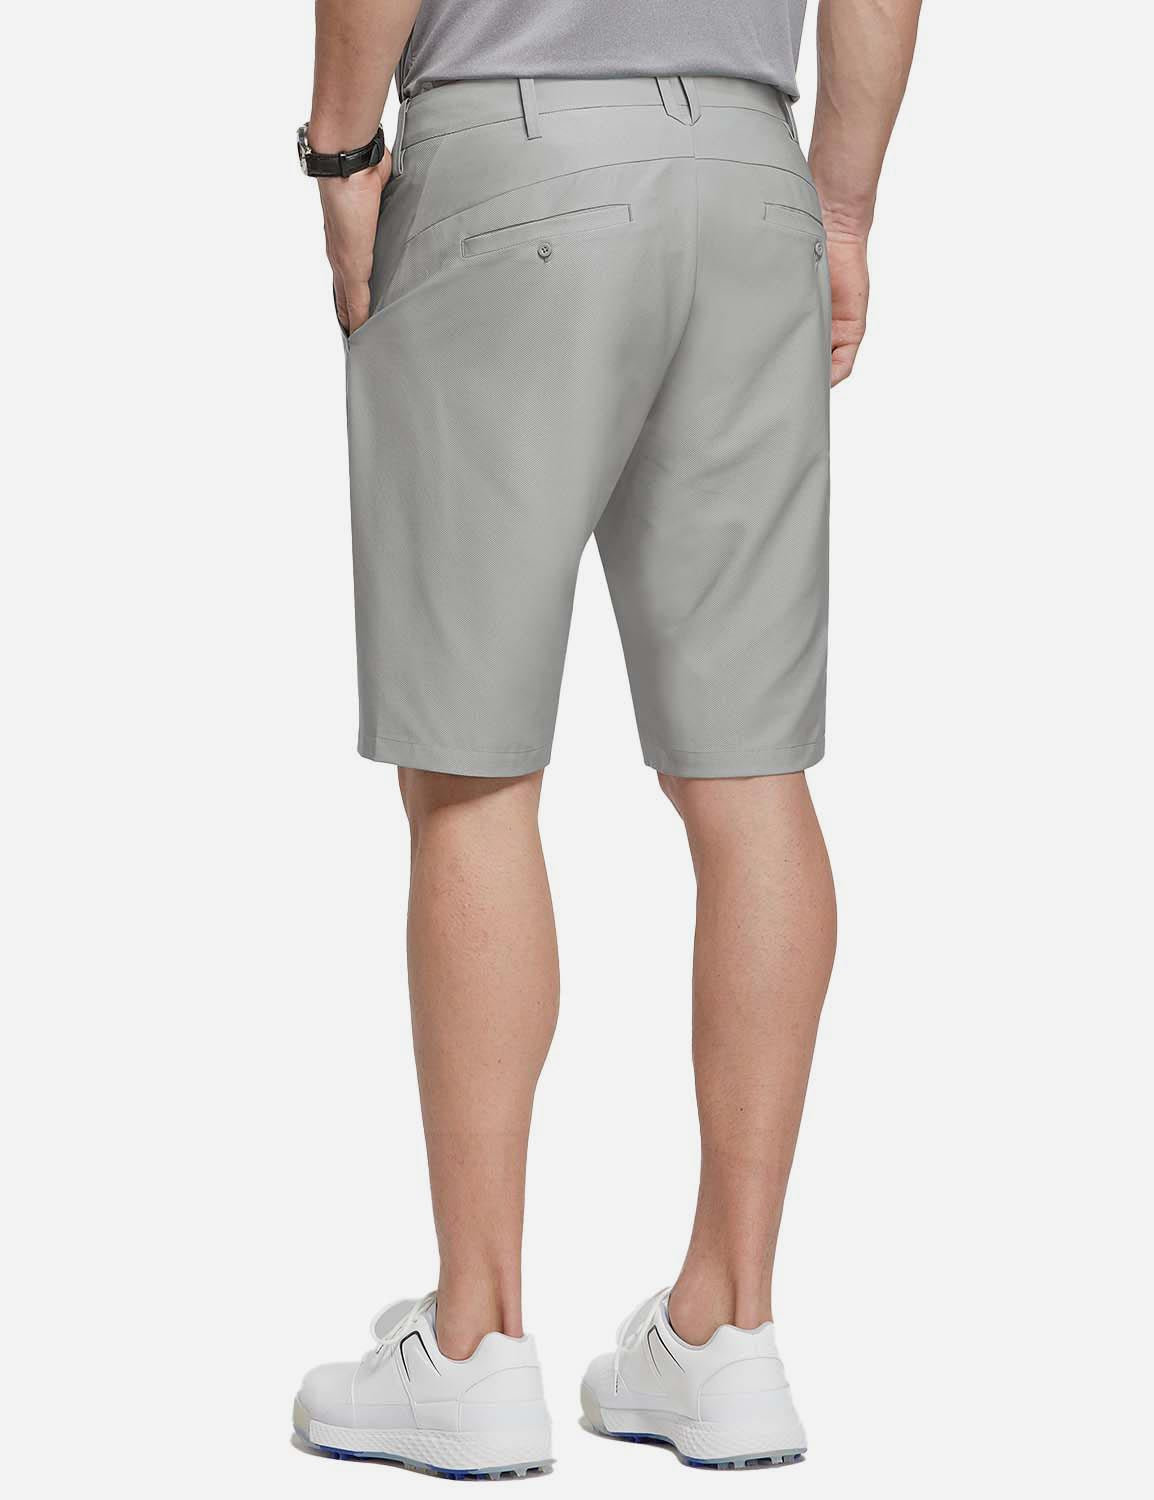 Baleaf Men's 10' UPF 50+ Lightweight Golf Shorts w Zipper Pockets cga005 Gray Back